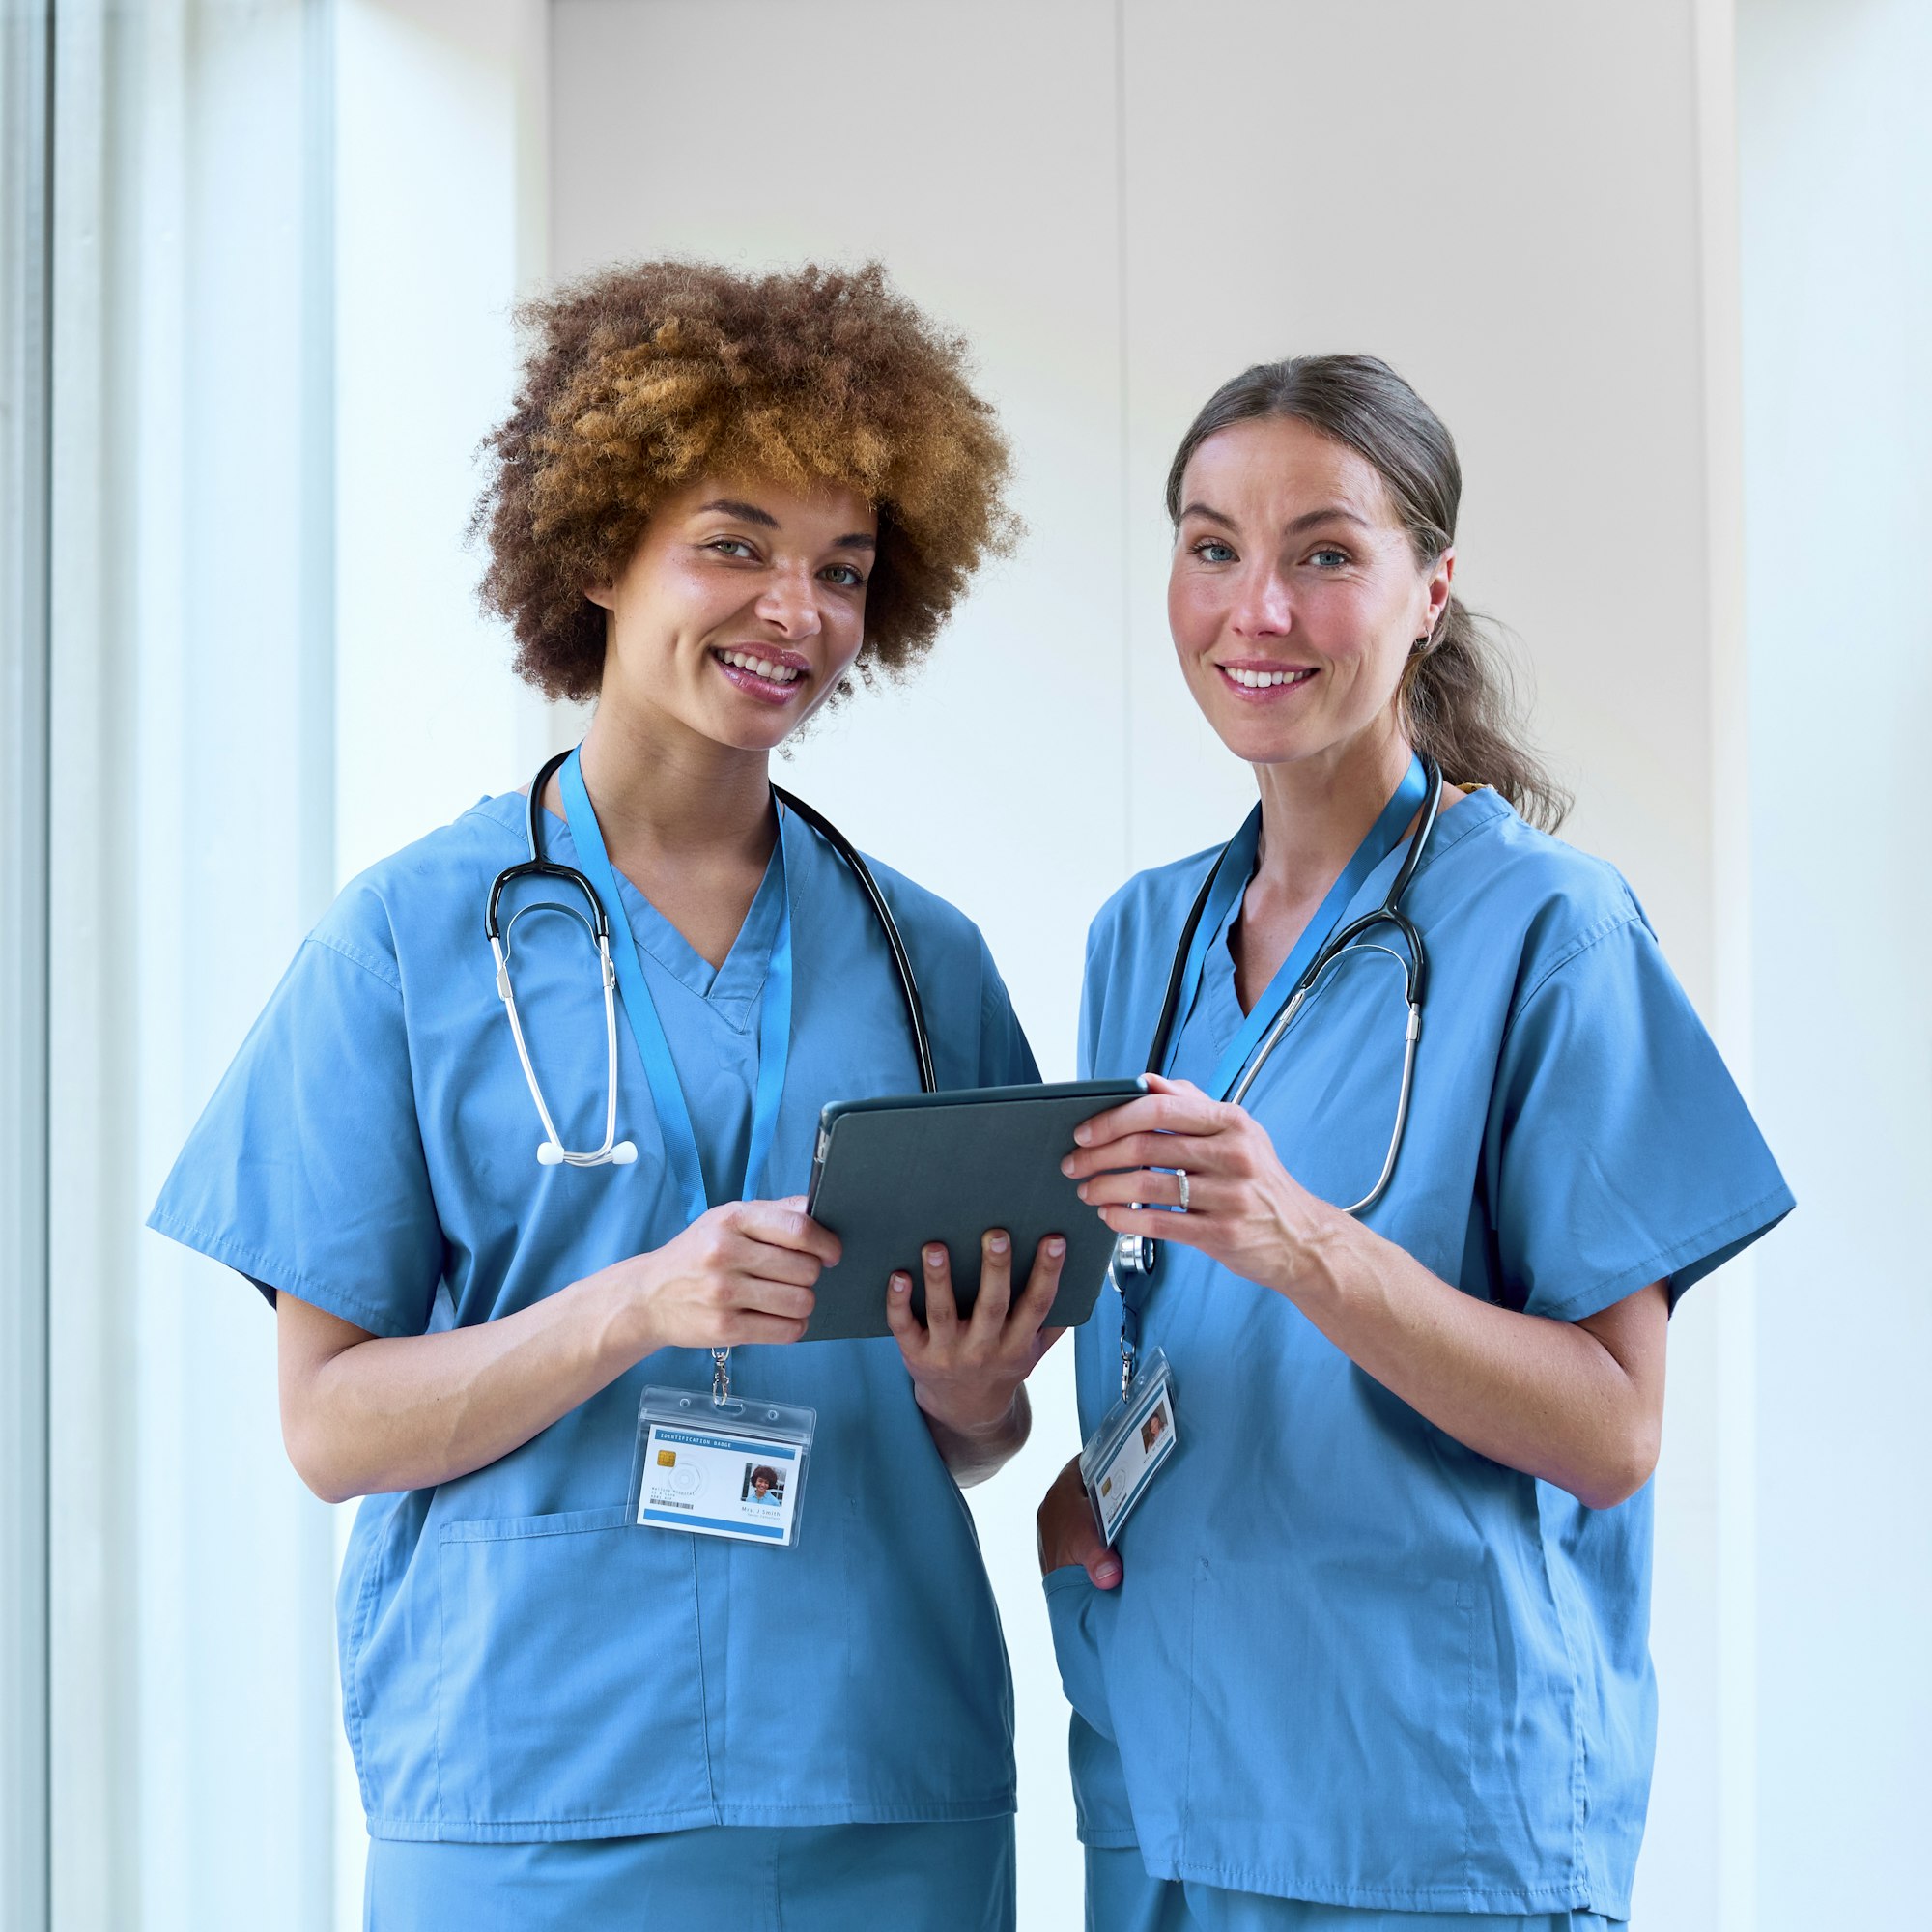 Portrait Of Two Female Doctors Wearing Scrubs With Digital Tablet In Hospital